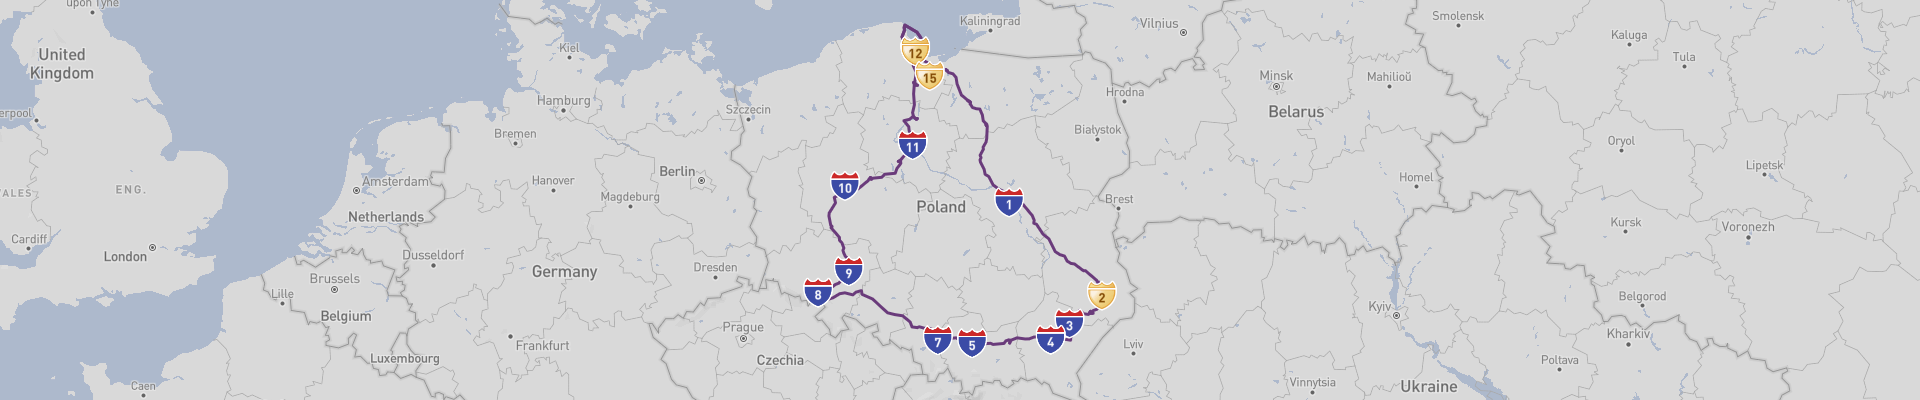 Itinéraire Poland 